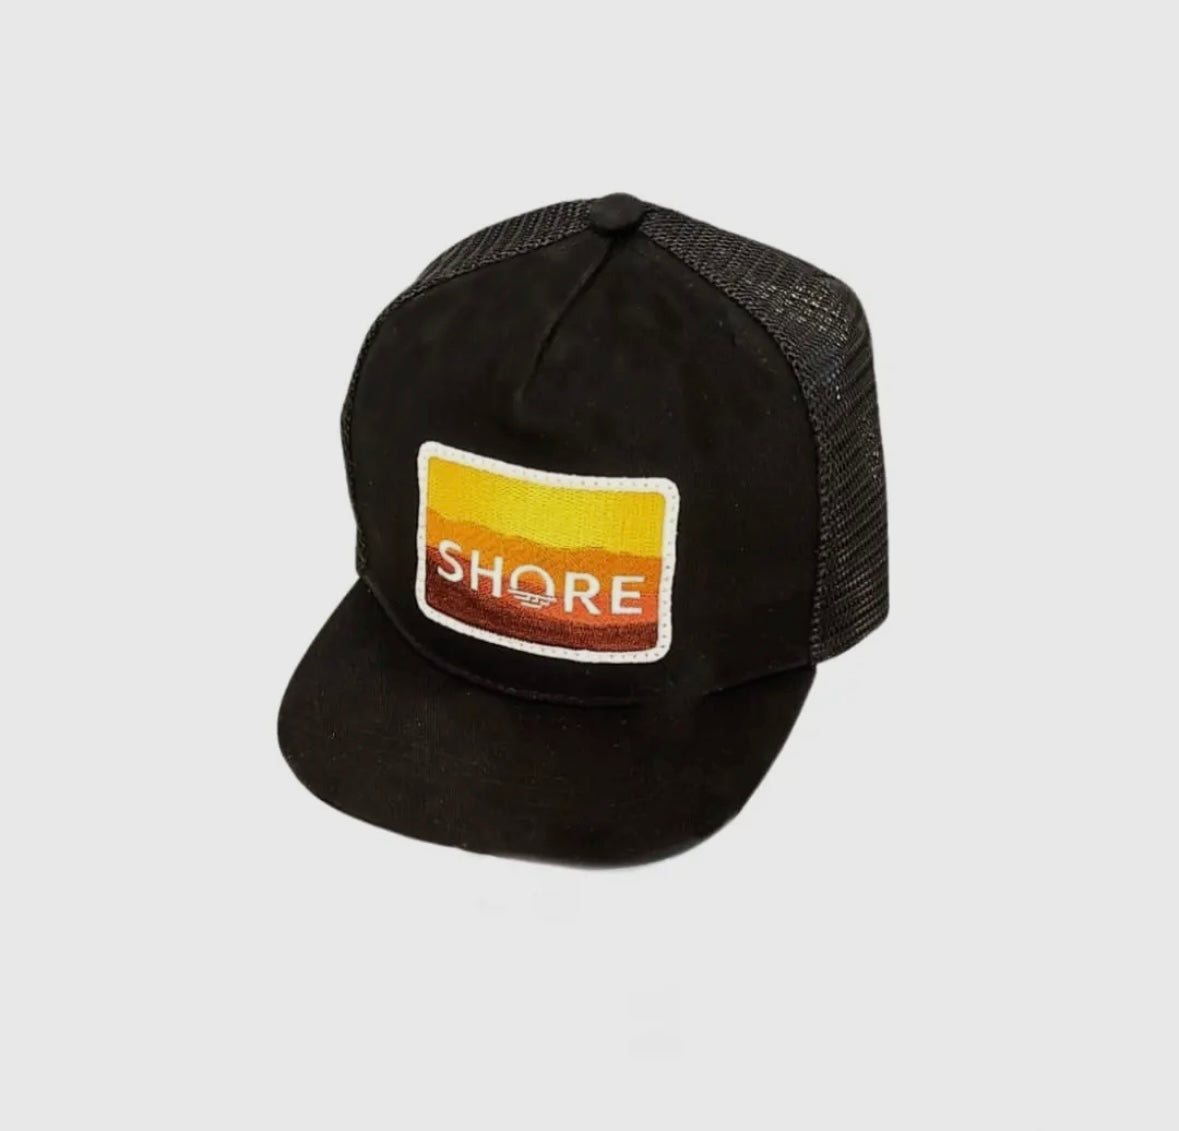 Shore apparel toddler & kids sunset hat